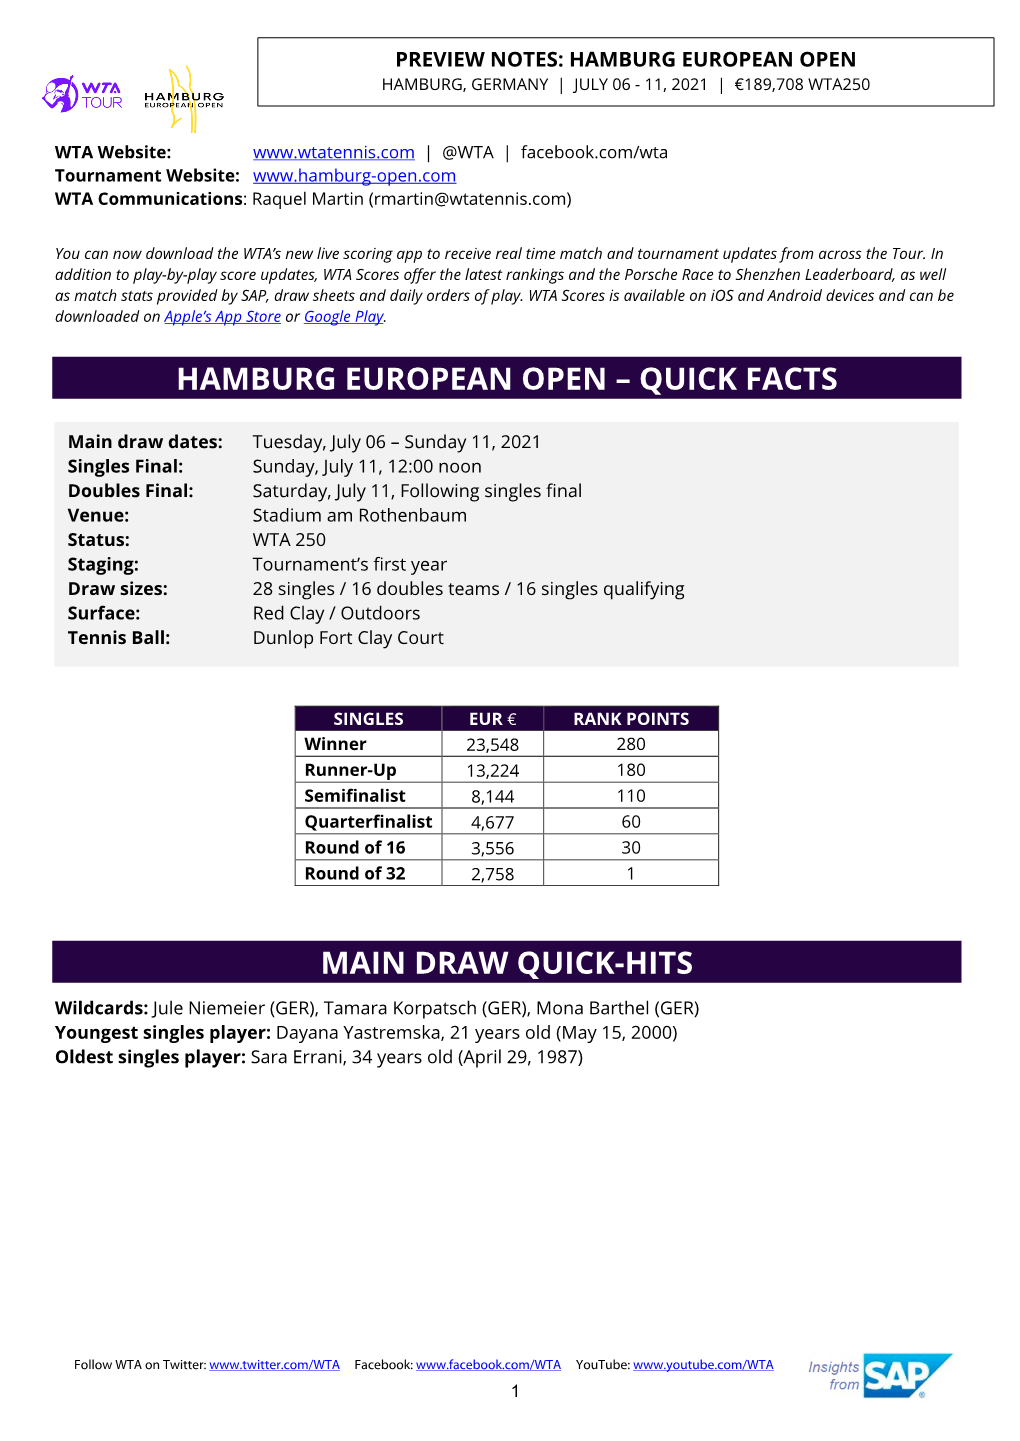 Hamburg European Open – Quick Facts Main Draw Quick-Hits